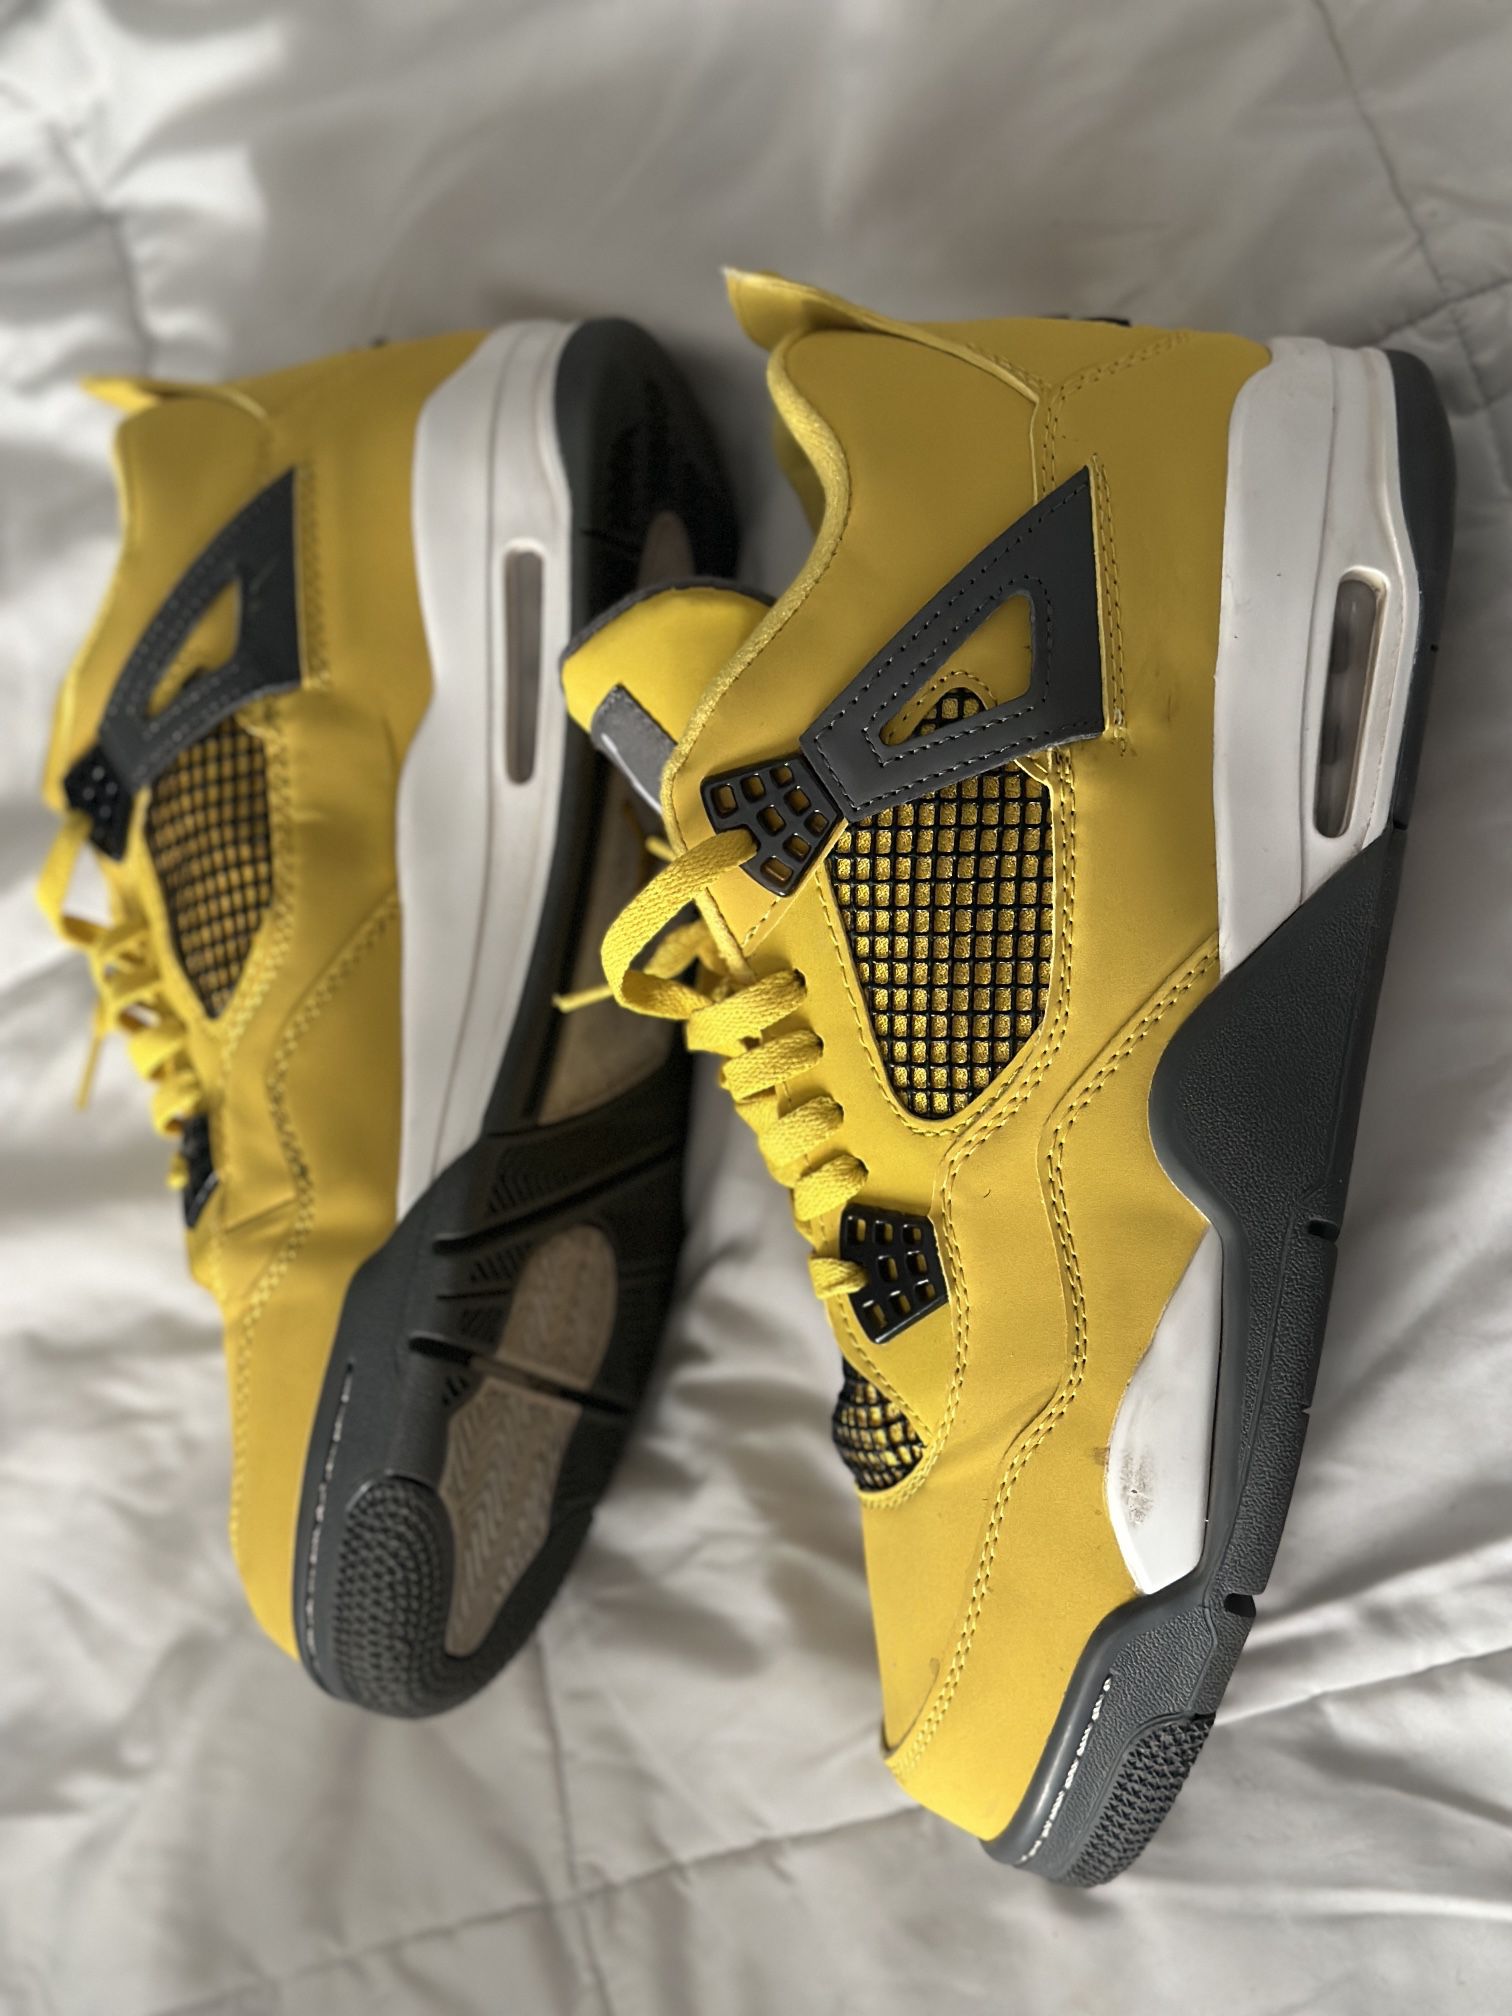 Used Men’s Size 13 Yellow Jordan 4s